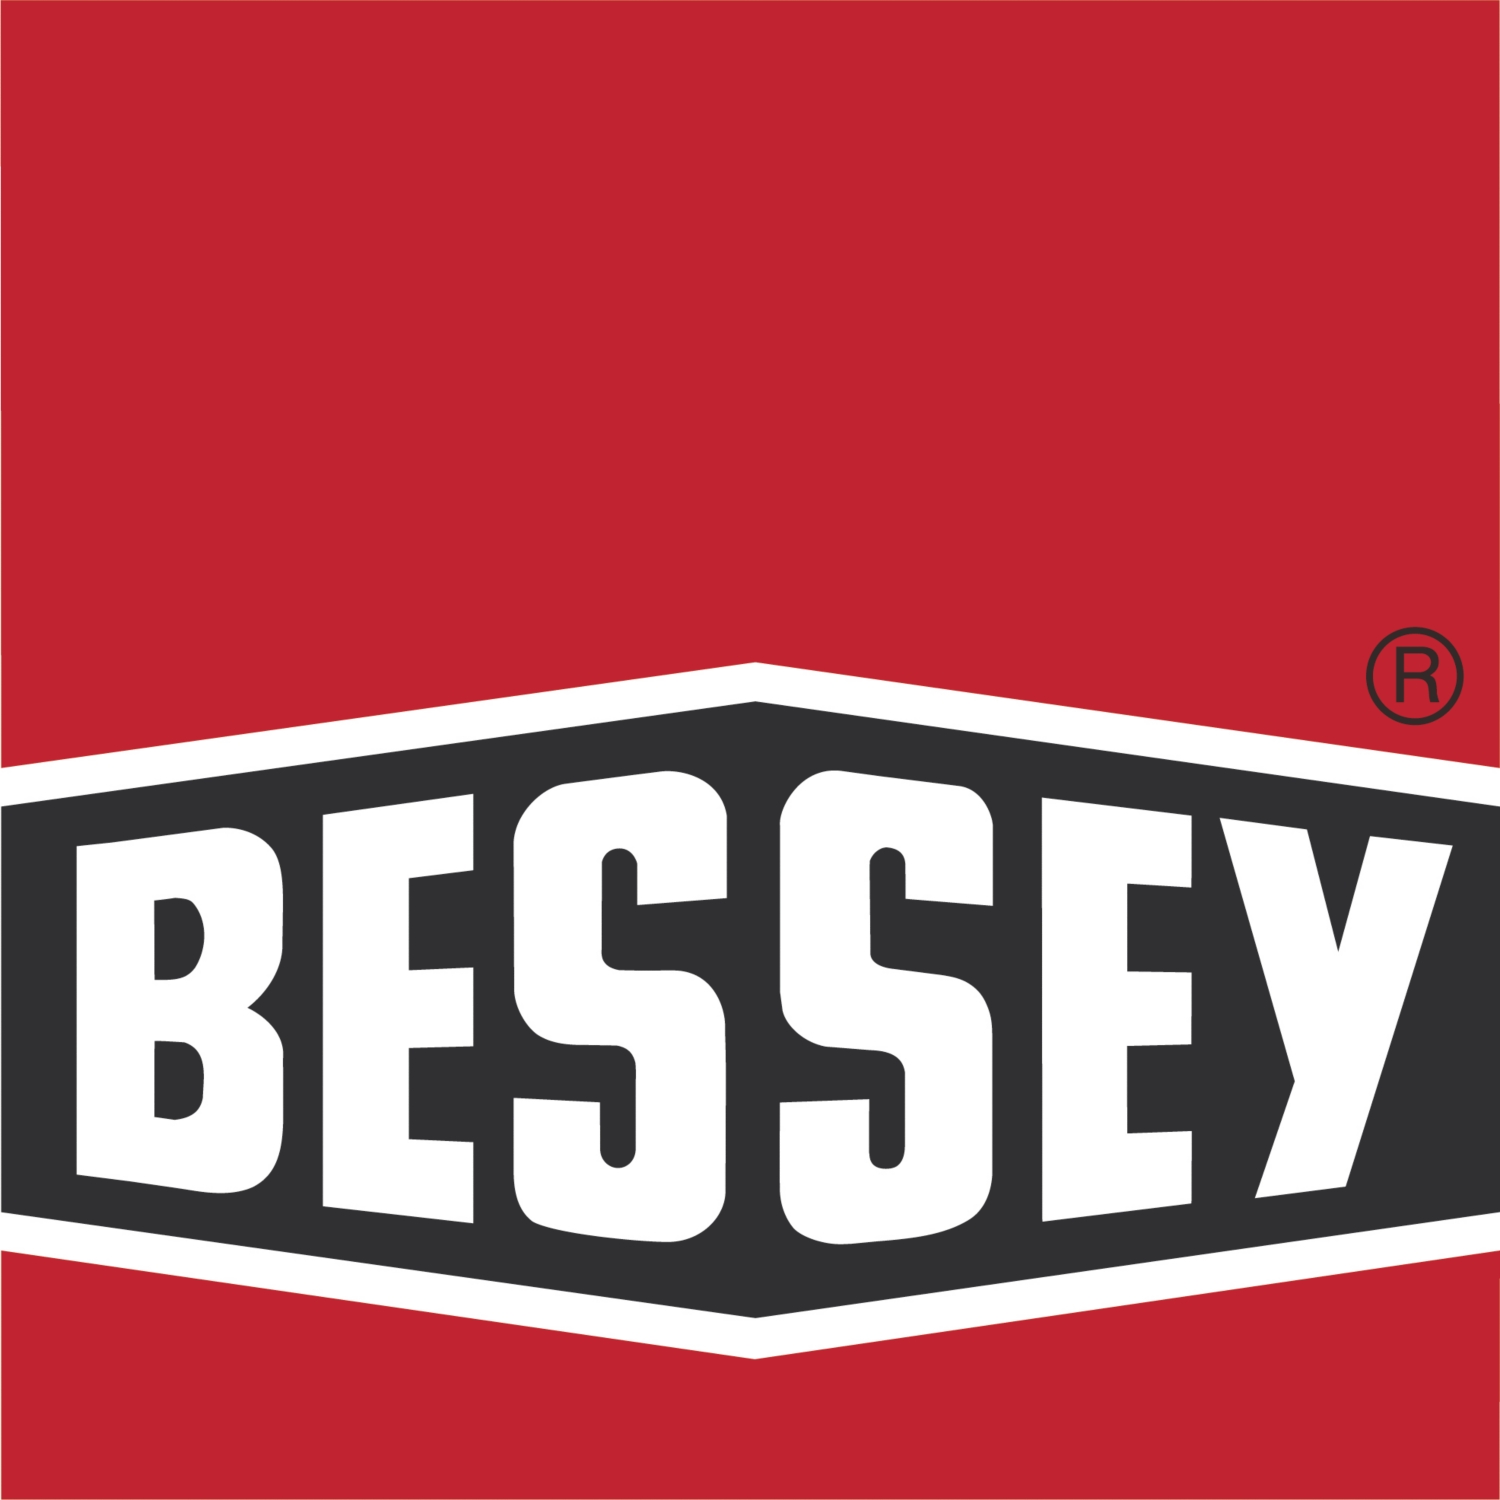 Logo Bessey